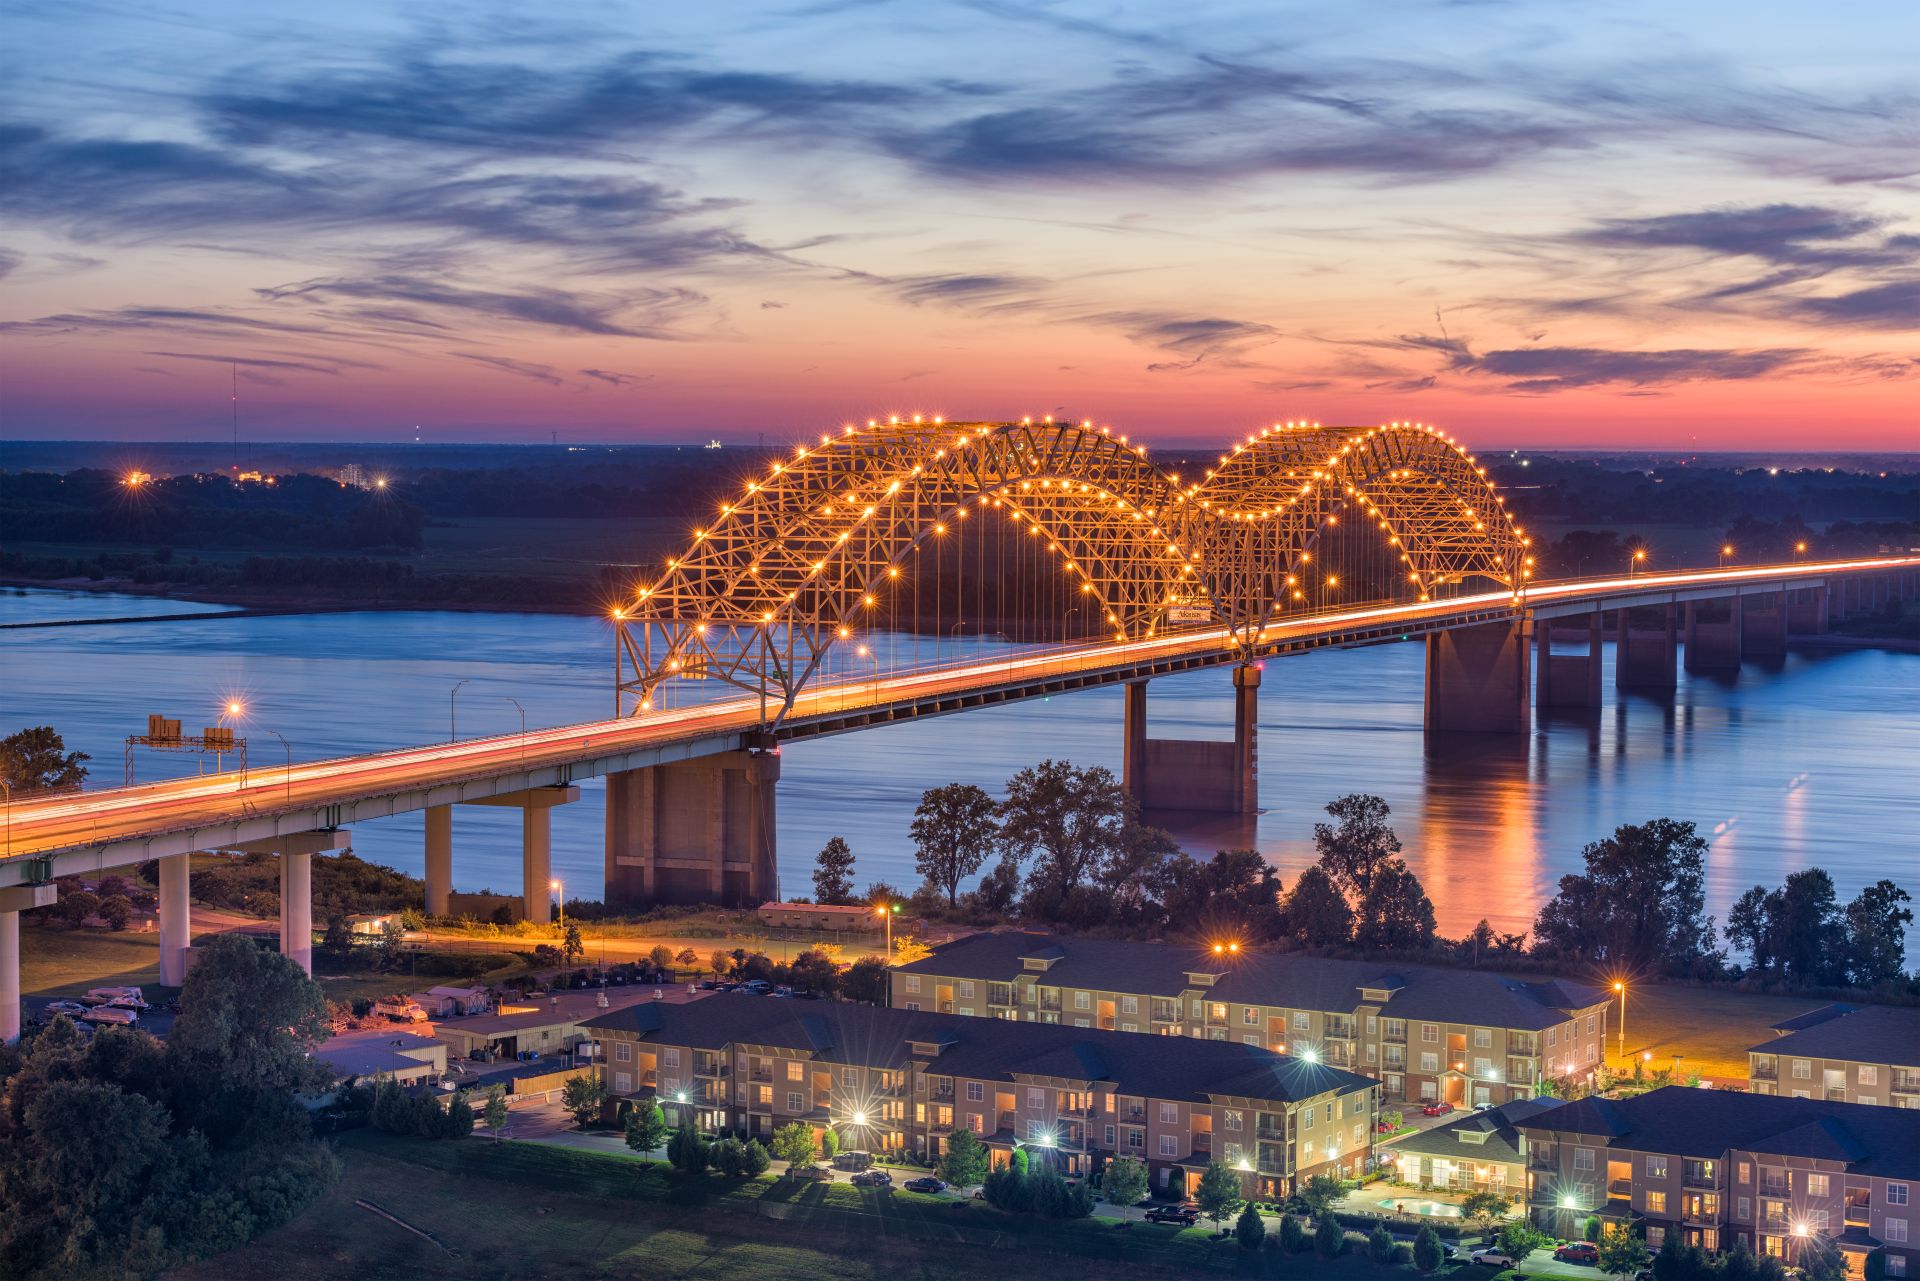 USA, Tennessee, Memphis at the Hernando de Soto Bridge